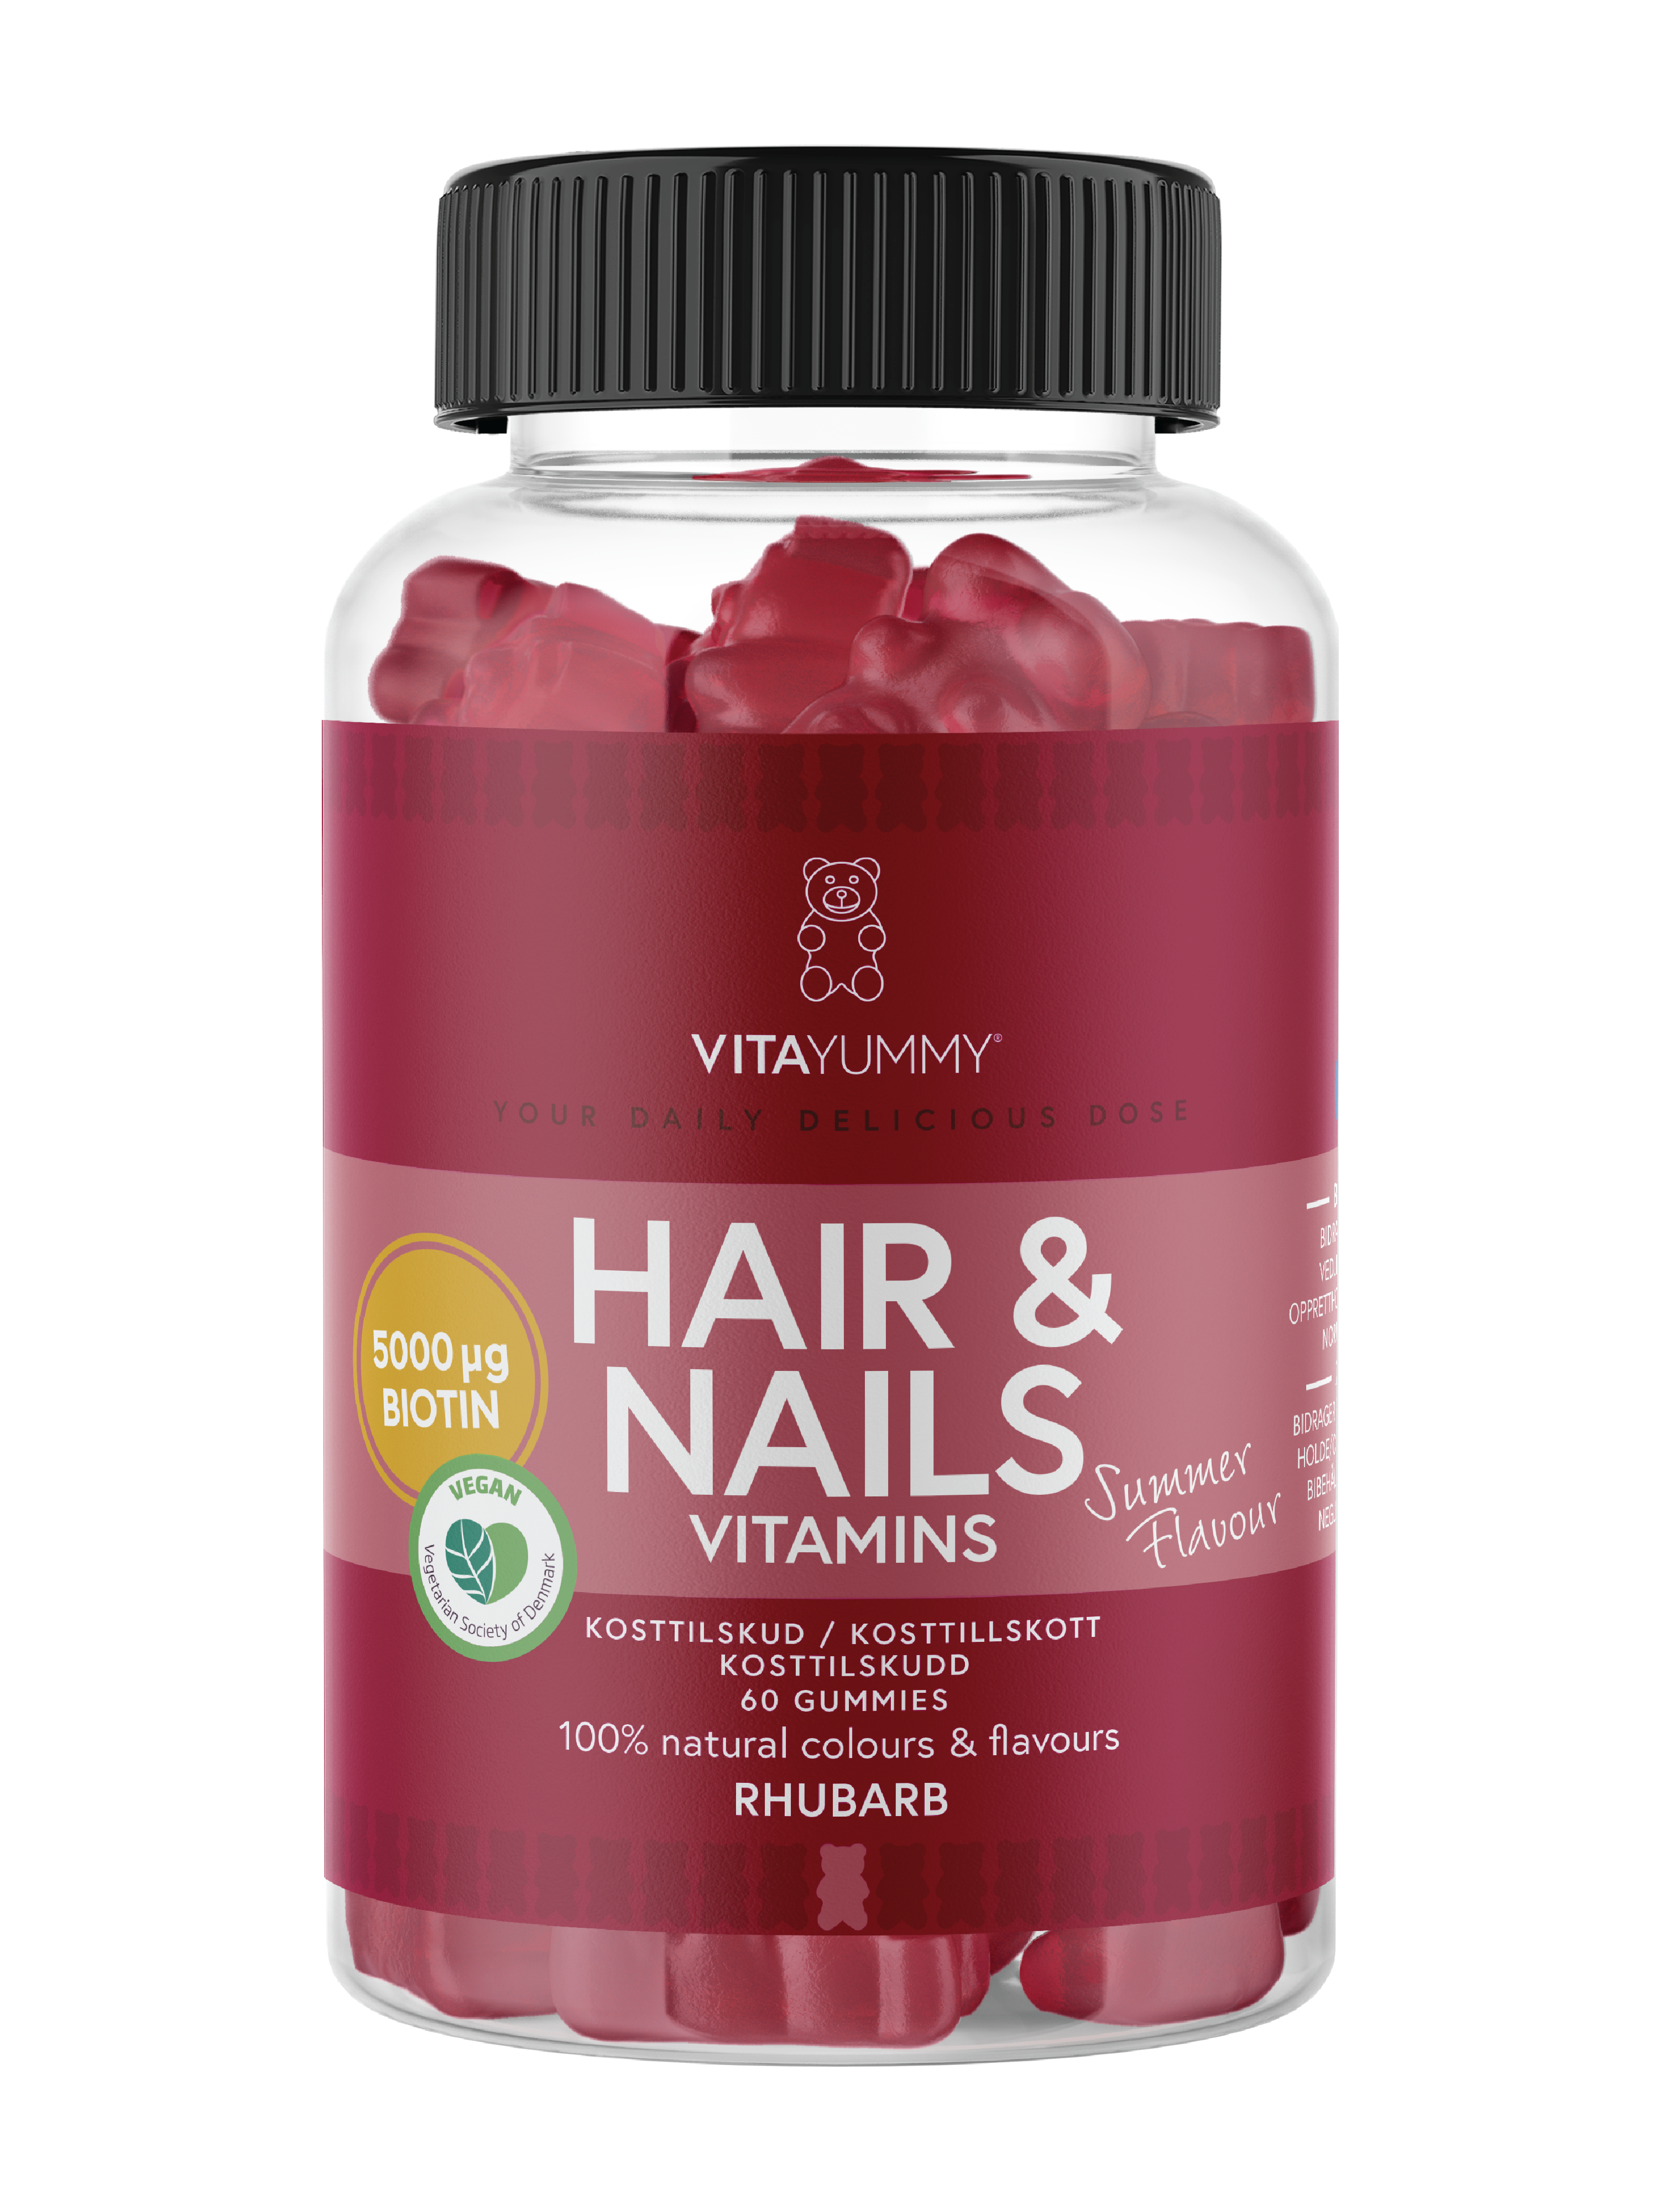 VitaYummy Hair & Nails Vitamins Summer Edition, Rabarbra, 60 stk.